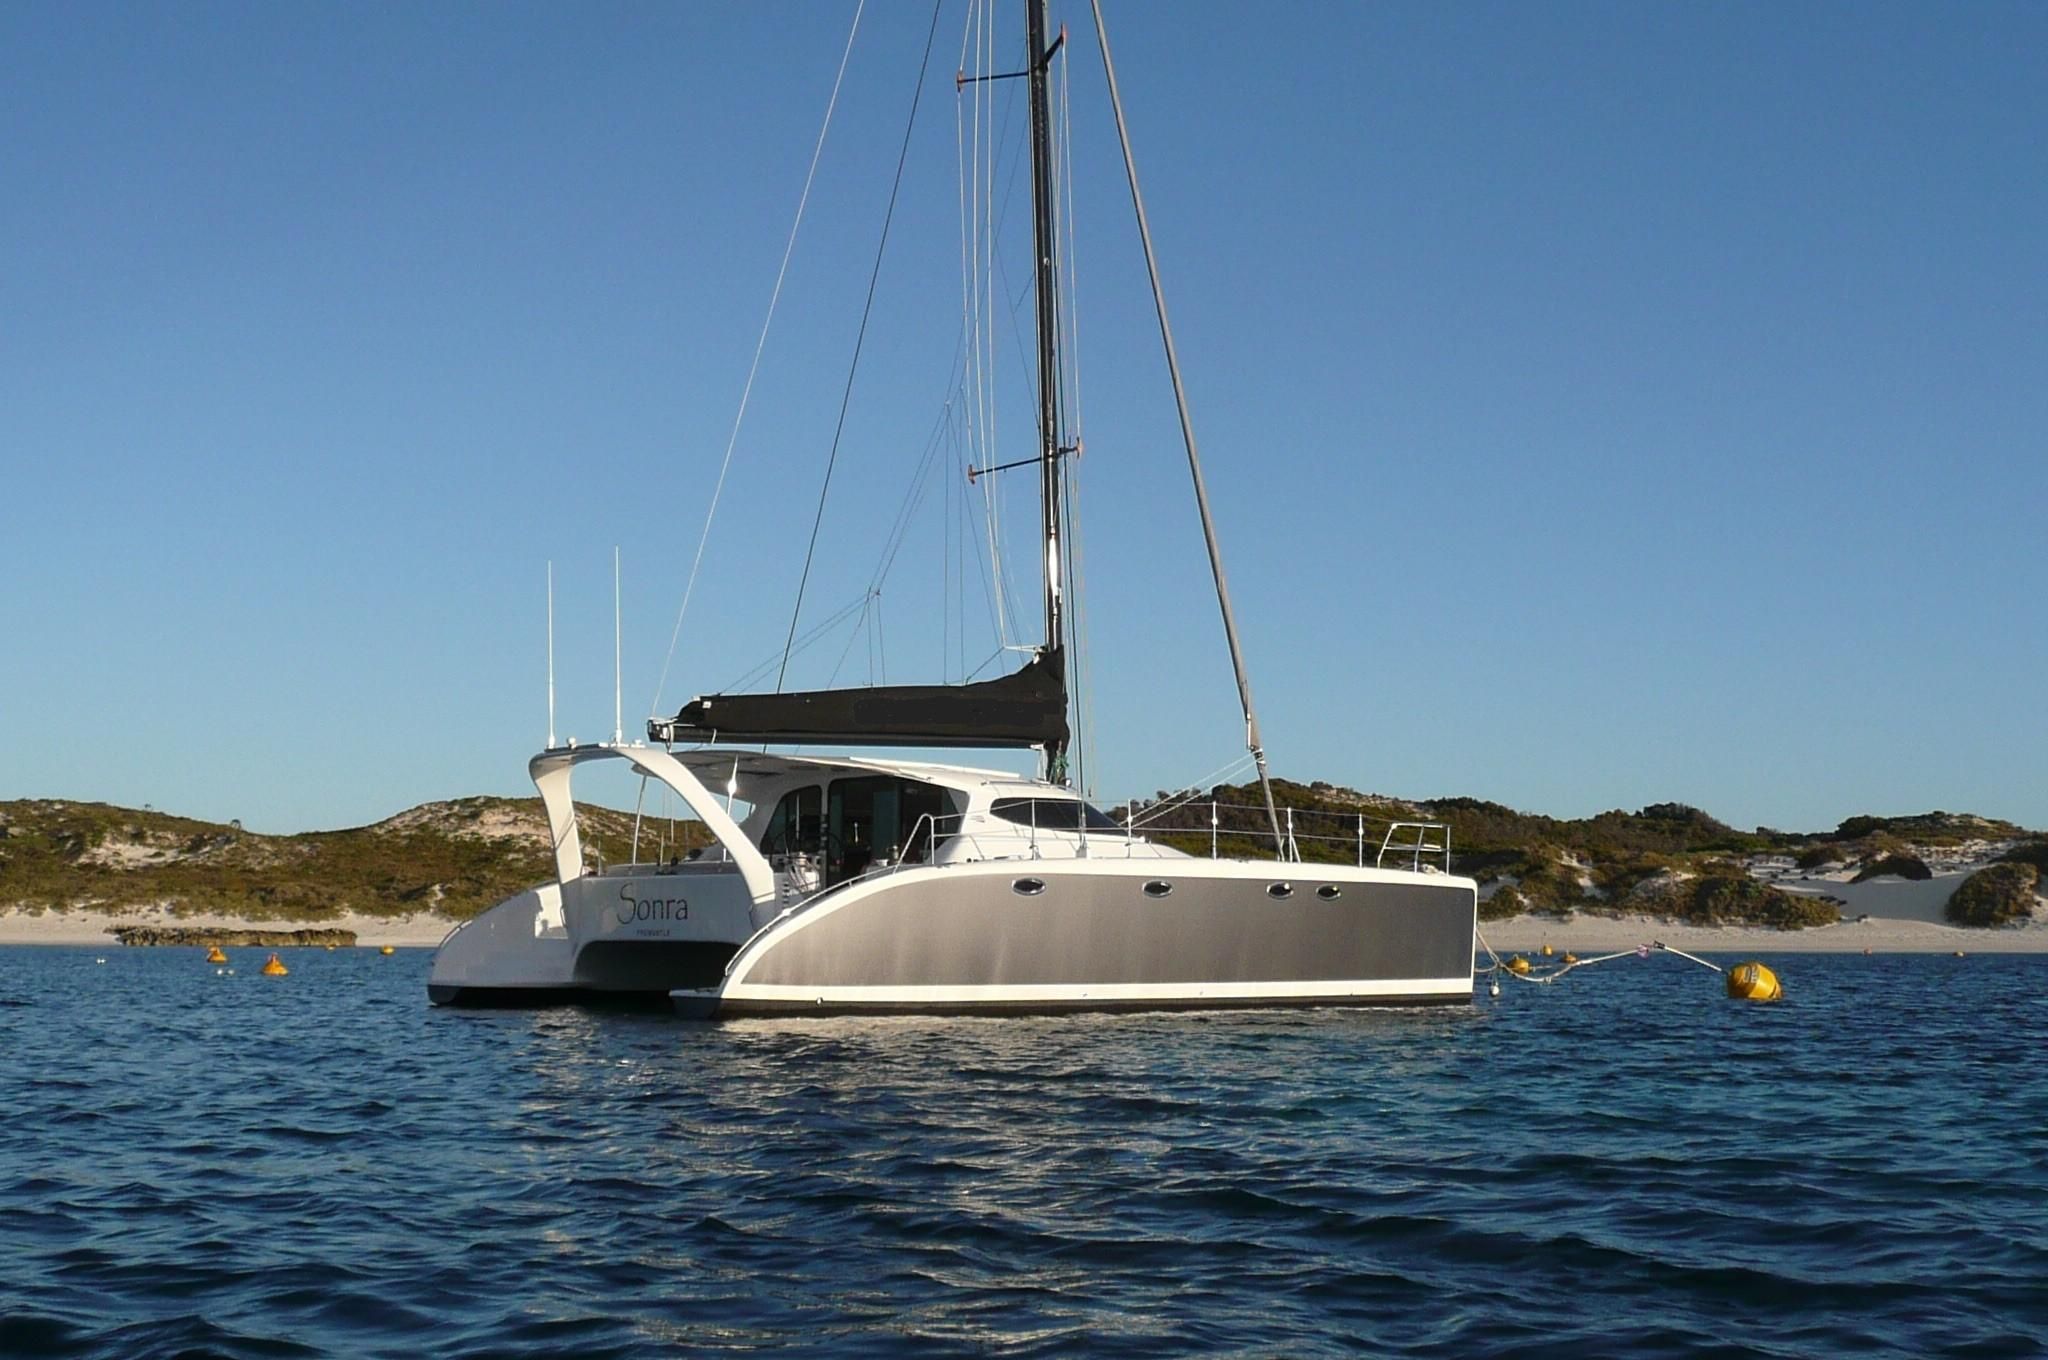 fusion 40 catamaran specifications